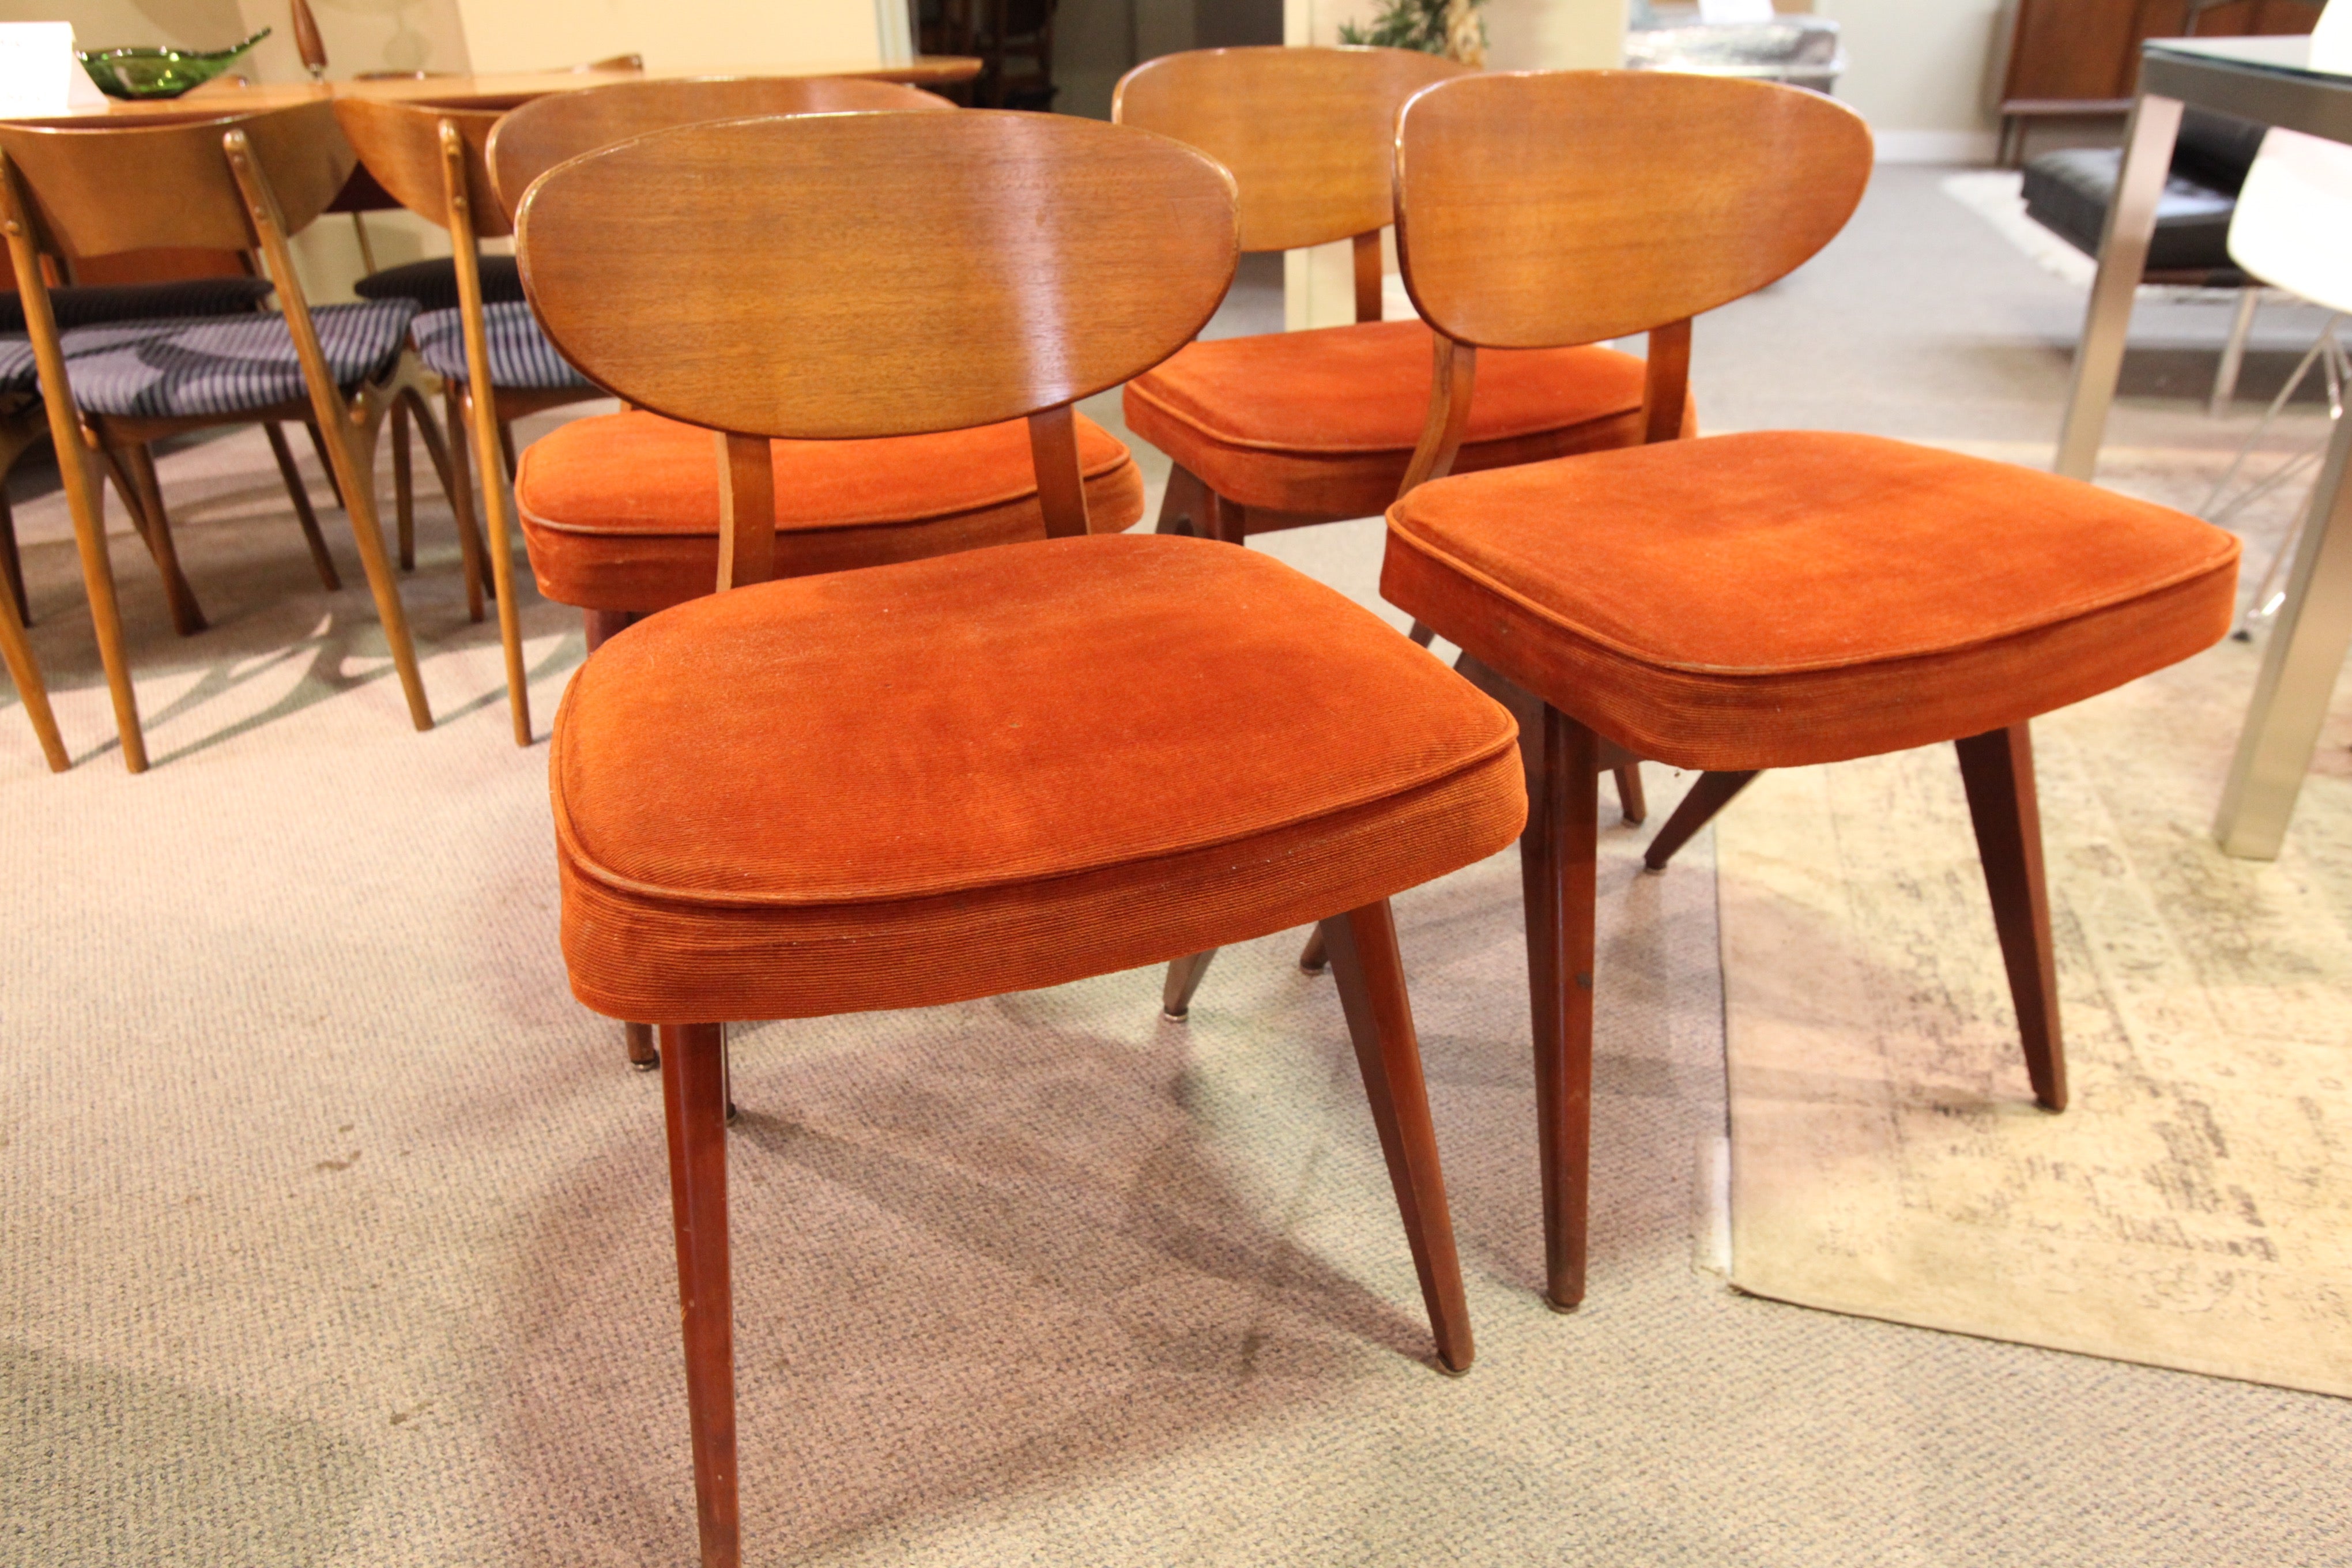 Set of 4 Vintage Mid Century Modern Chairs